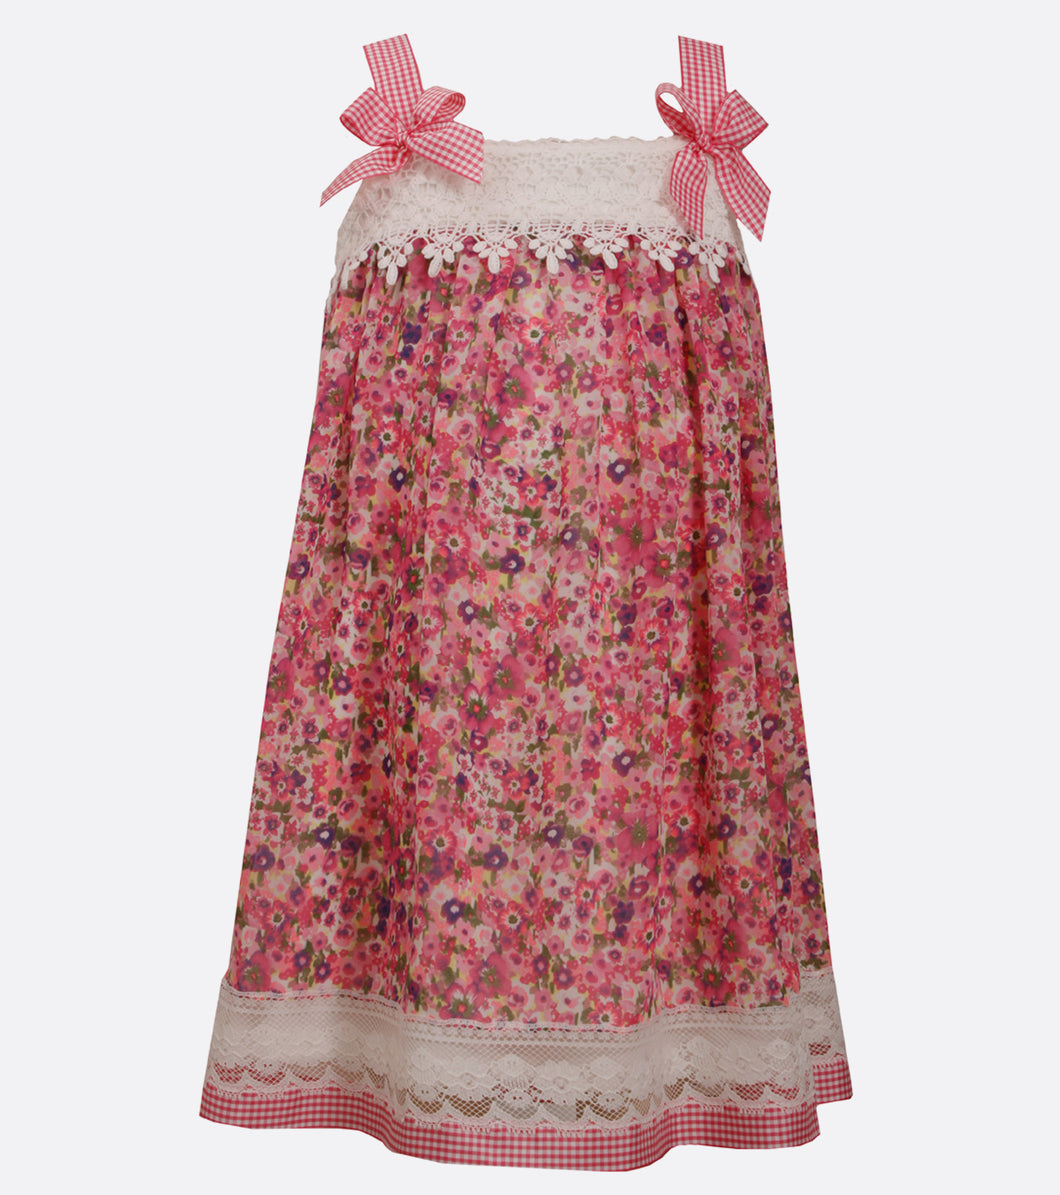 Bonnie Jean Floral Chiffon and lace dress